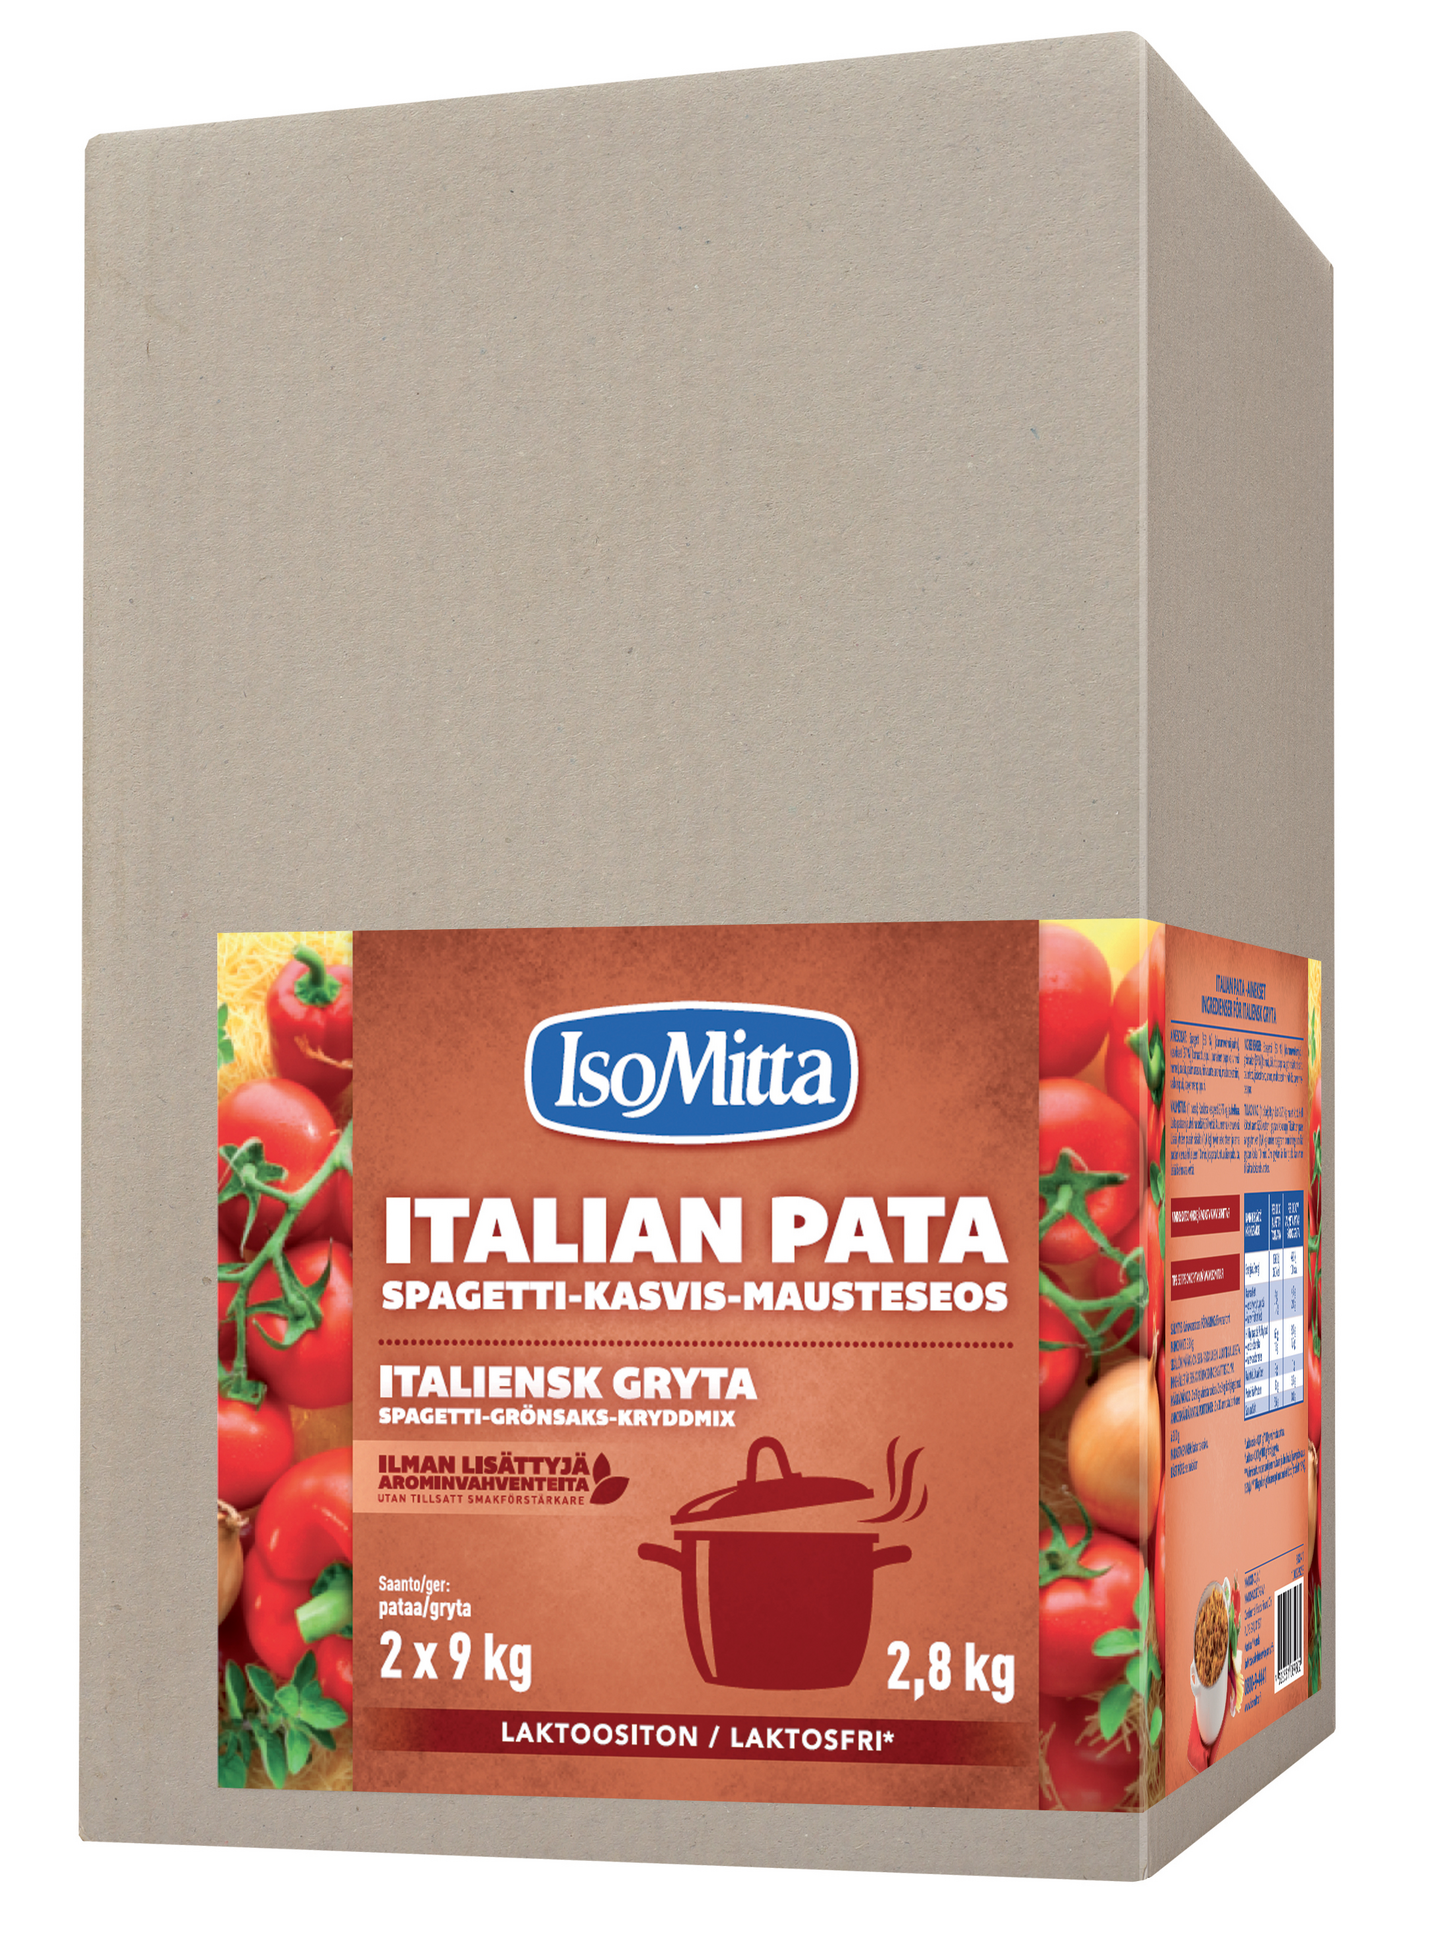 IsoMitta Italian pata spagetti-kasvis-mausteseos 2,8kg